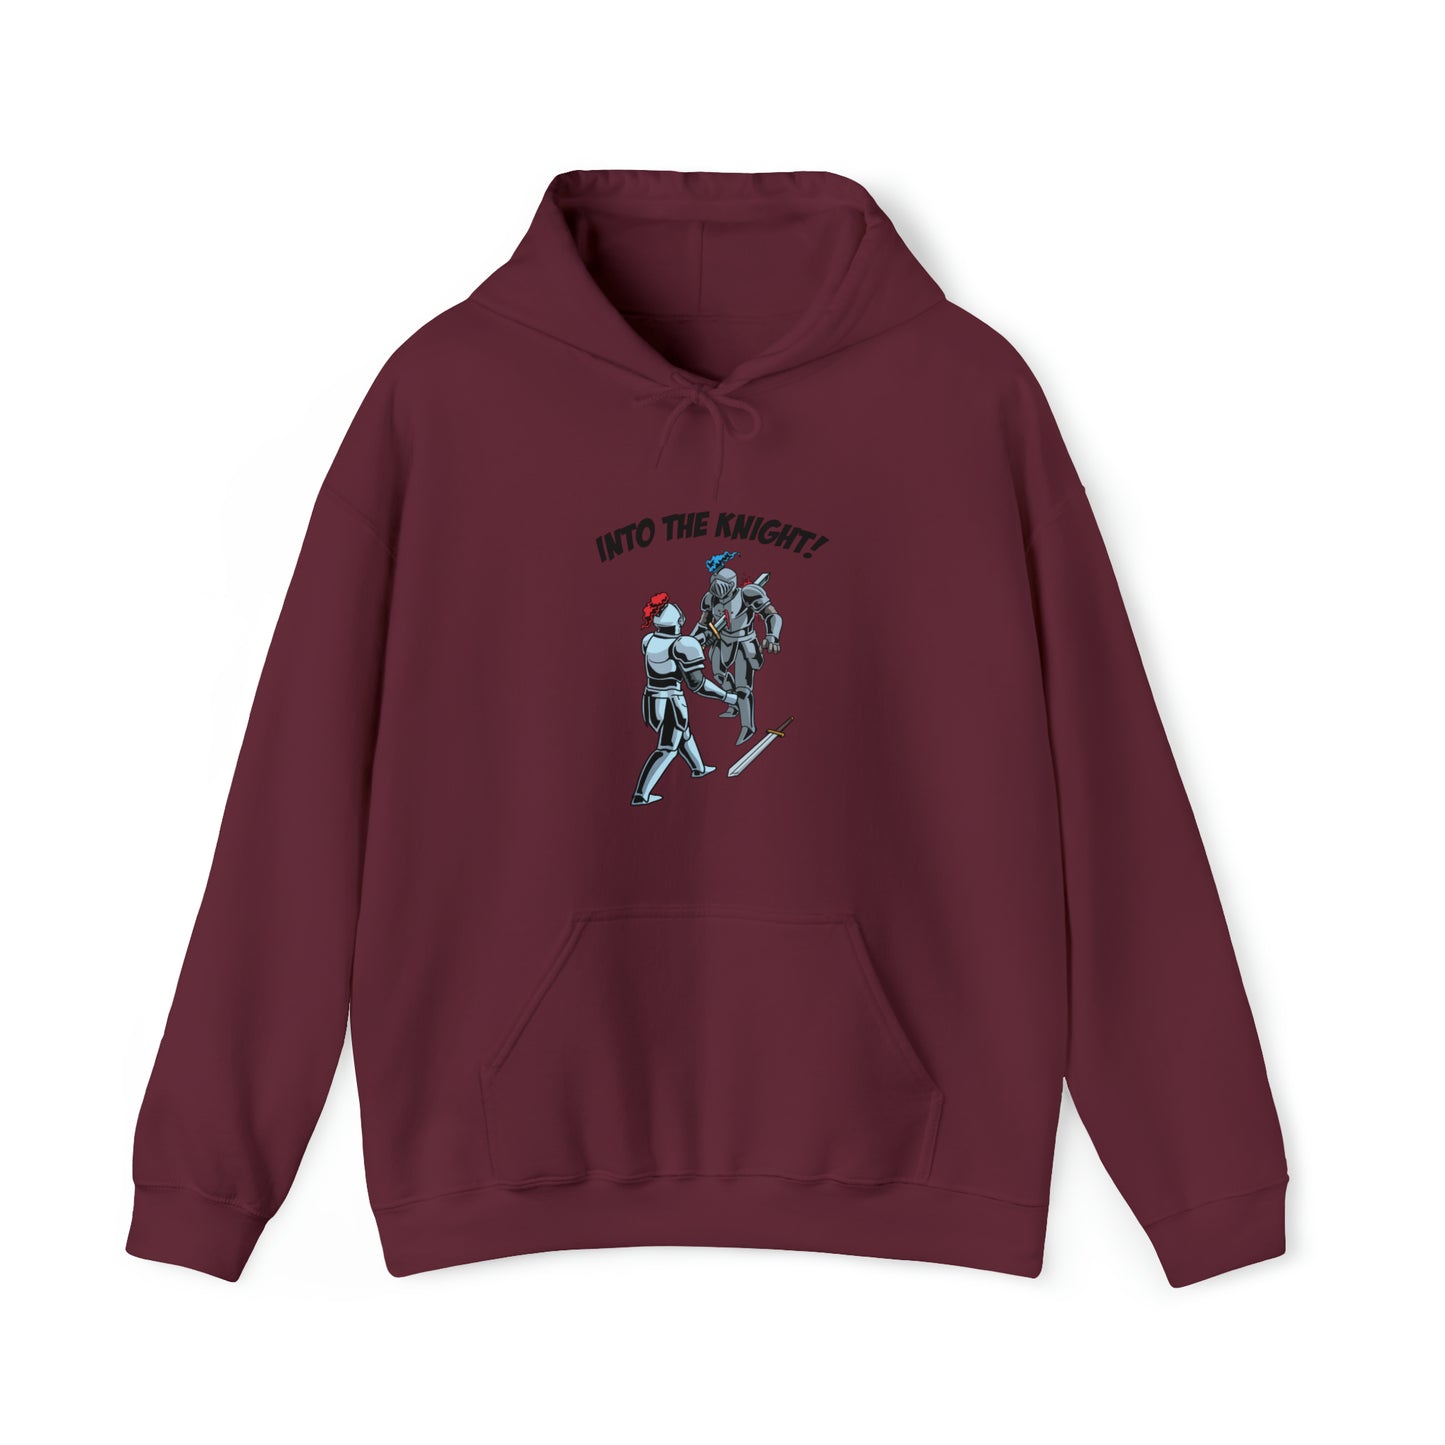 Custom Parody Hooded Sweatshirt, Into The Knight design